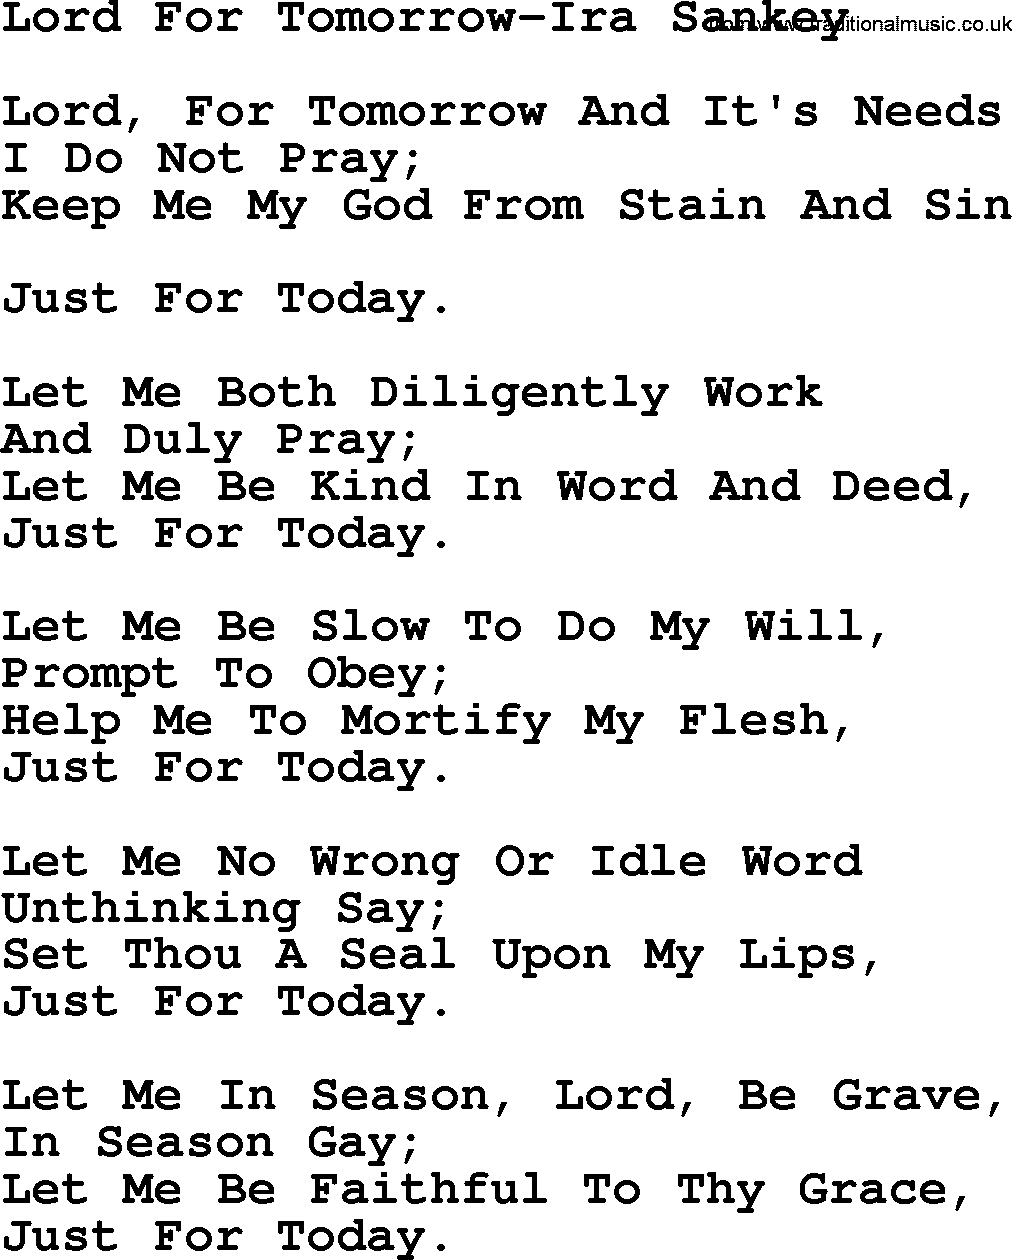 Ira Sankey hymn: Lord For Tomorrow-Ira Sankey, lyrics